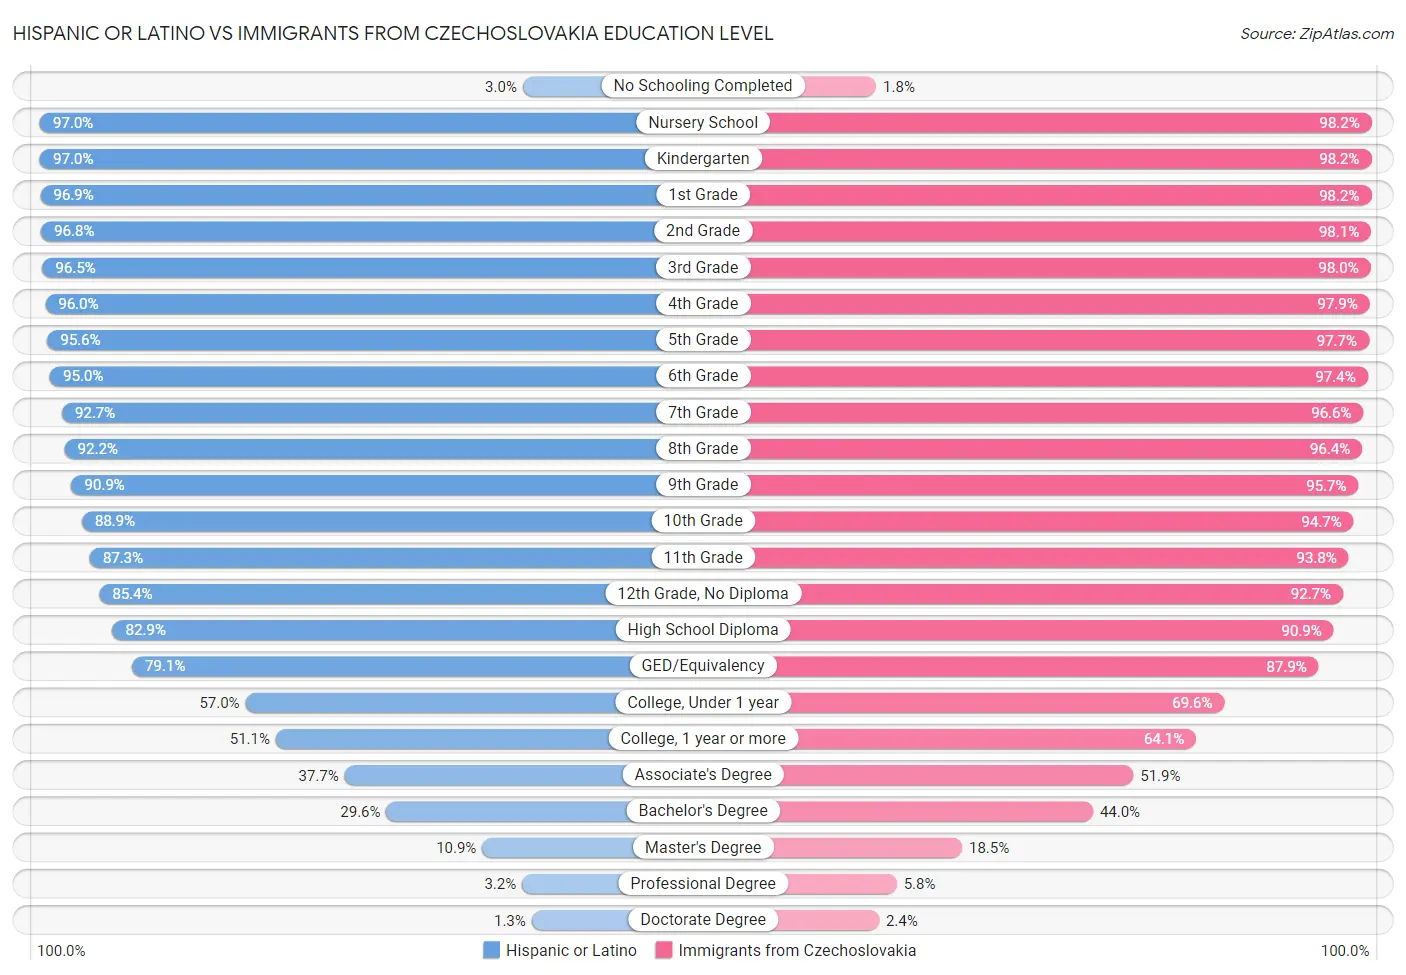 Hispanic or Latino vs Immigrants from Czechoslovakia Education Level